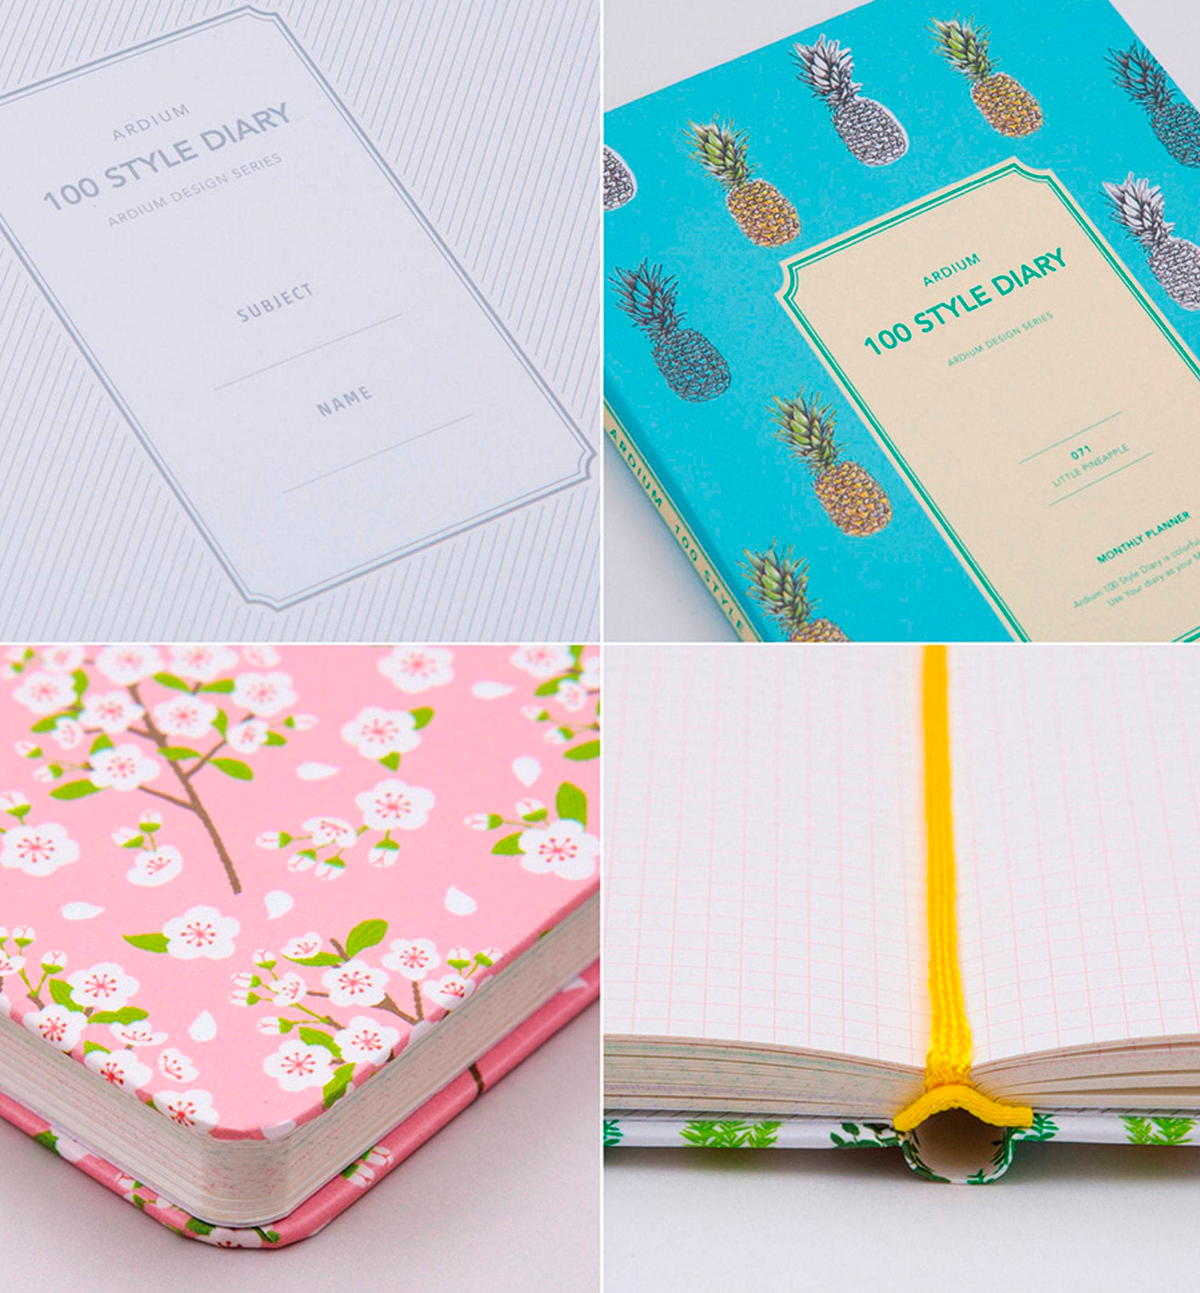 100 Style Diary [Yellow Cherry Blossom]